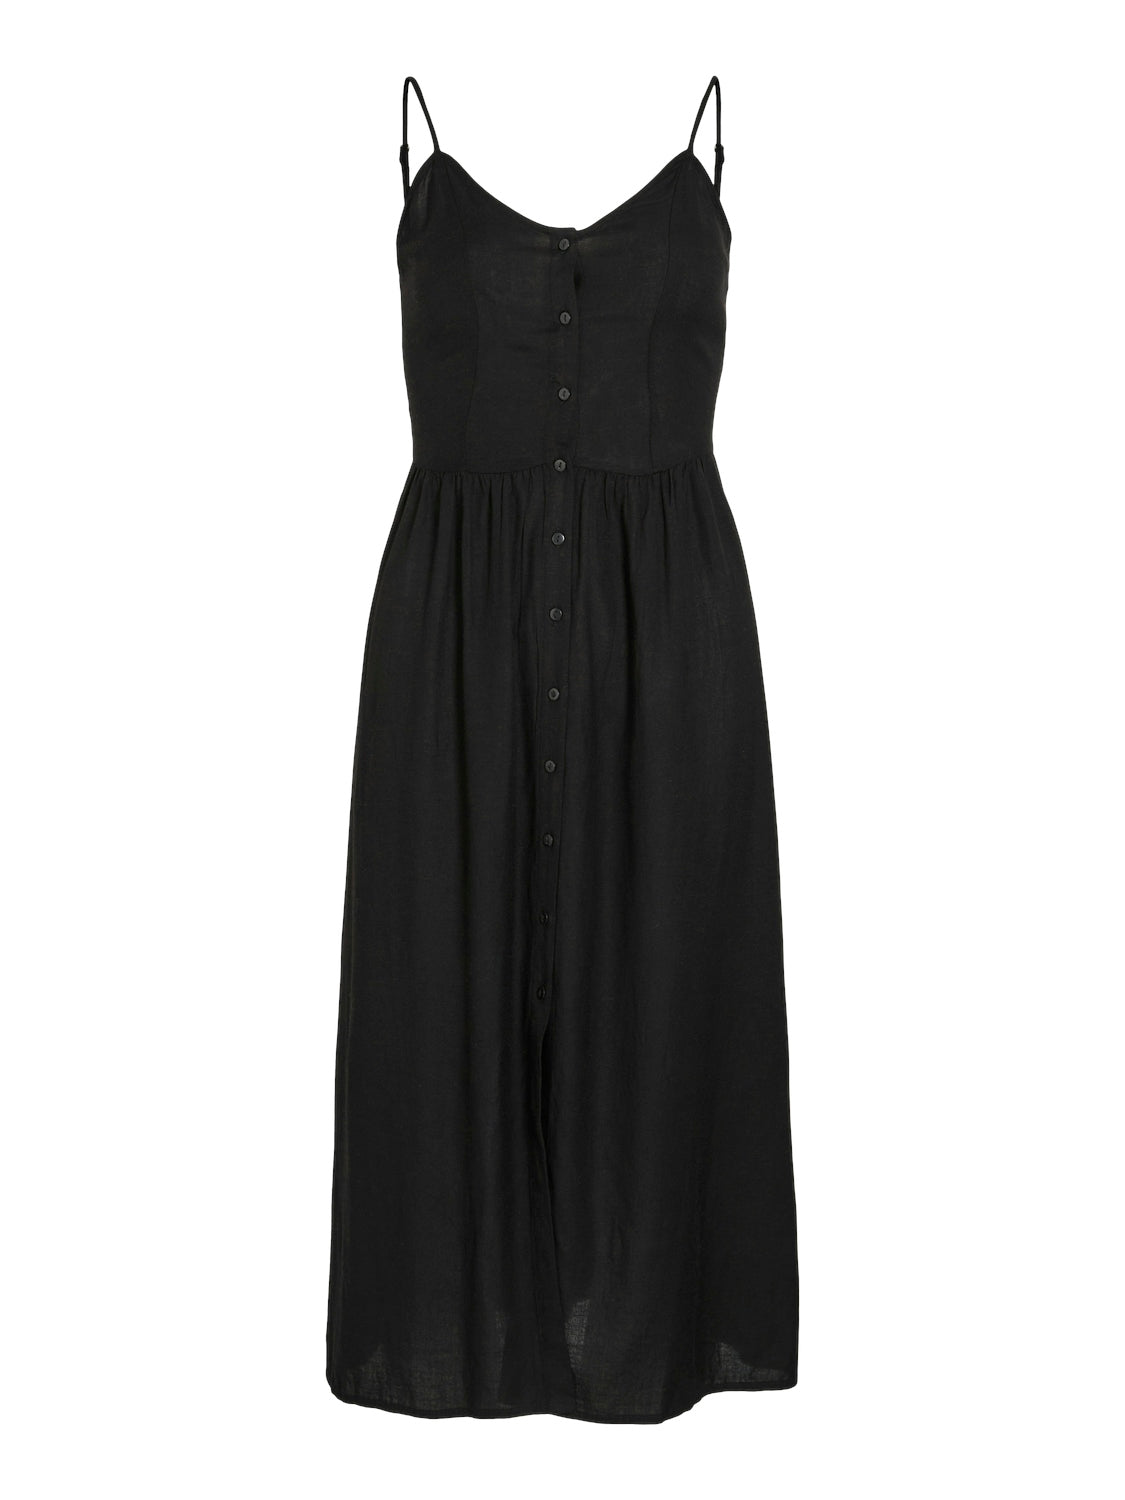 Pricil Dress Black